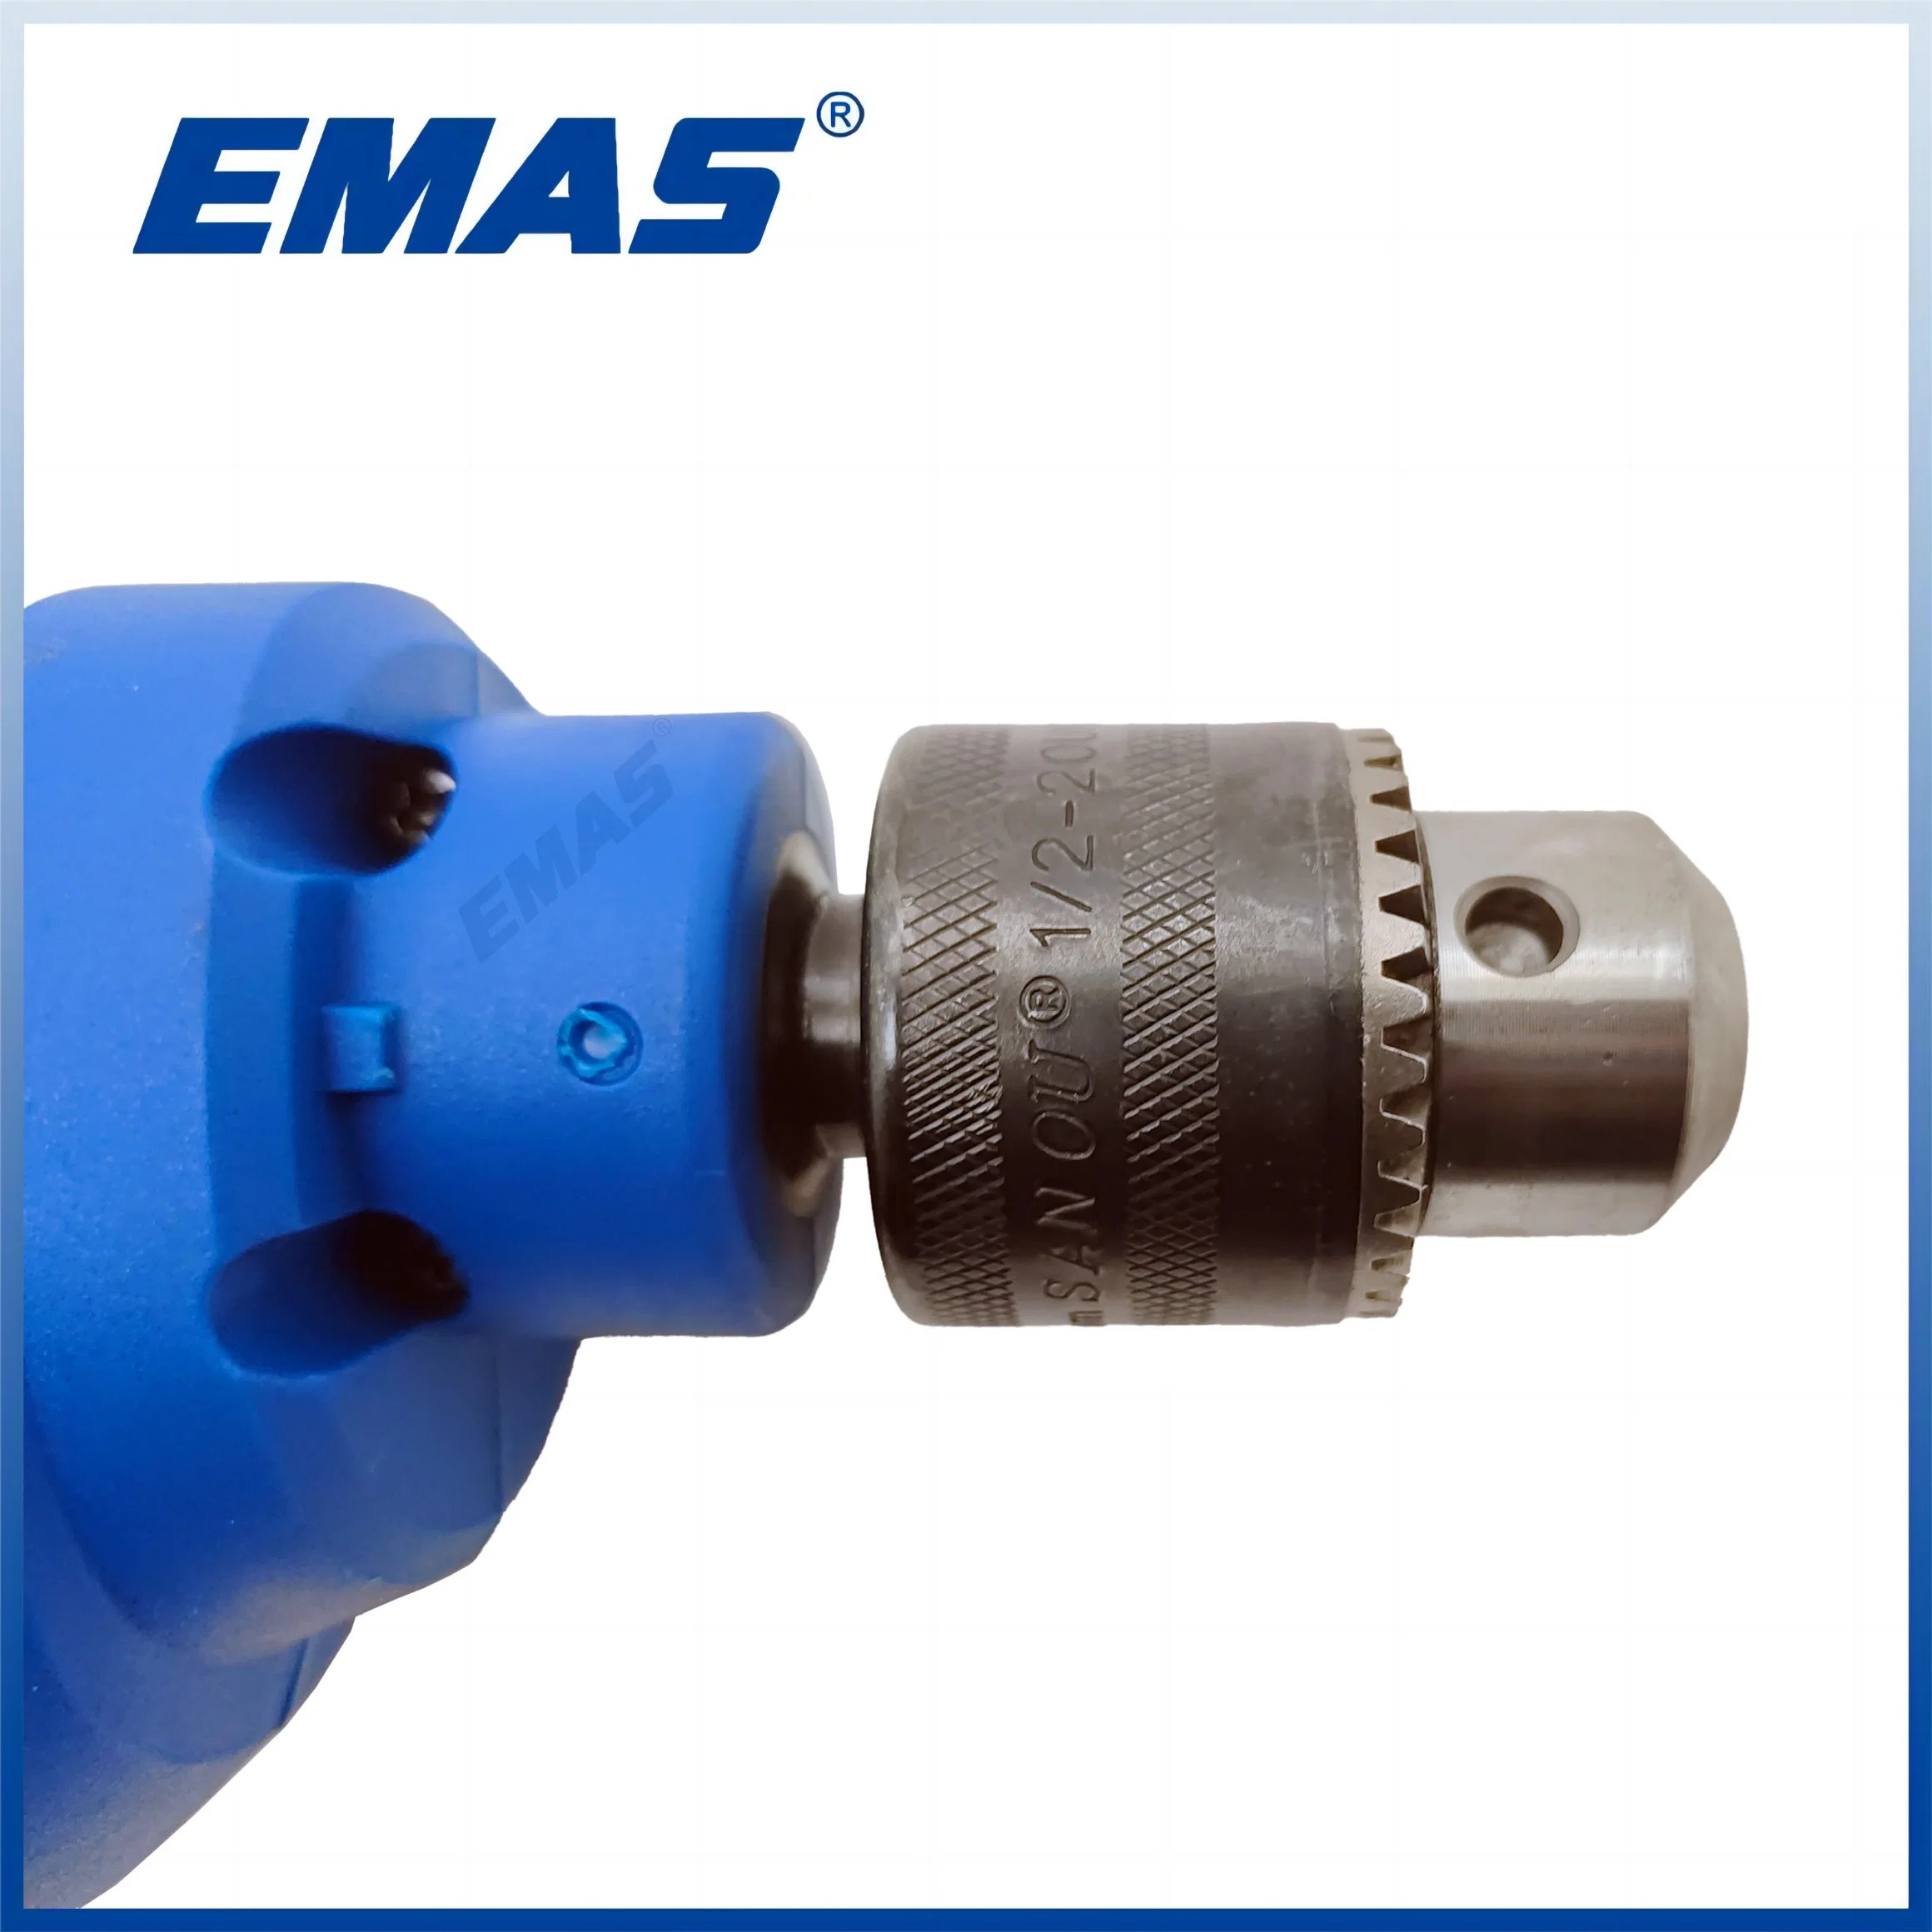 Emas Power Tools Perceuse électrique 220V 650W Perceuse à percussion 13mm